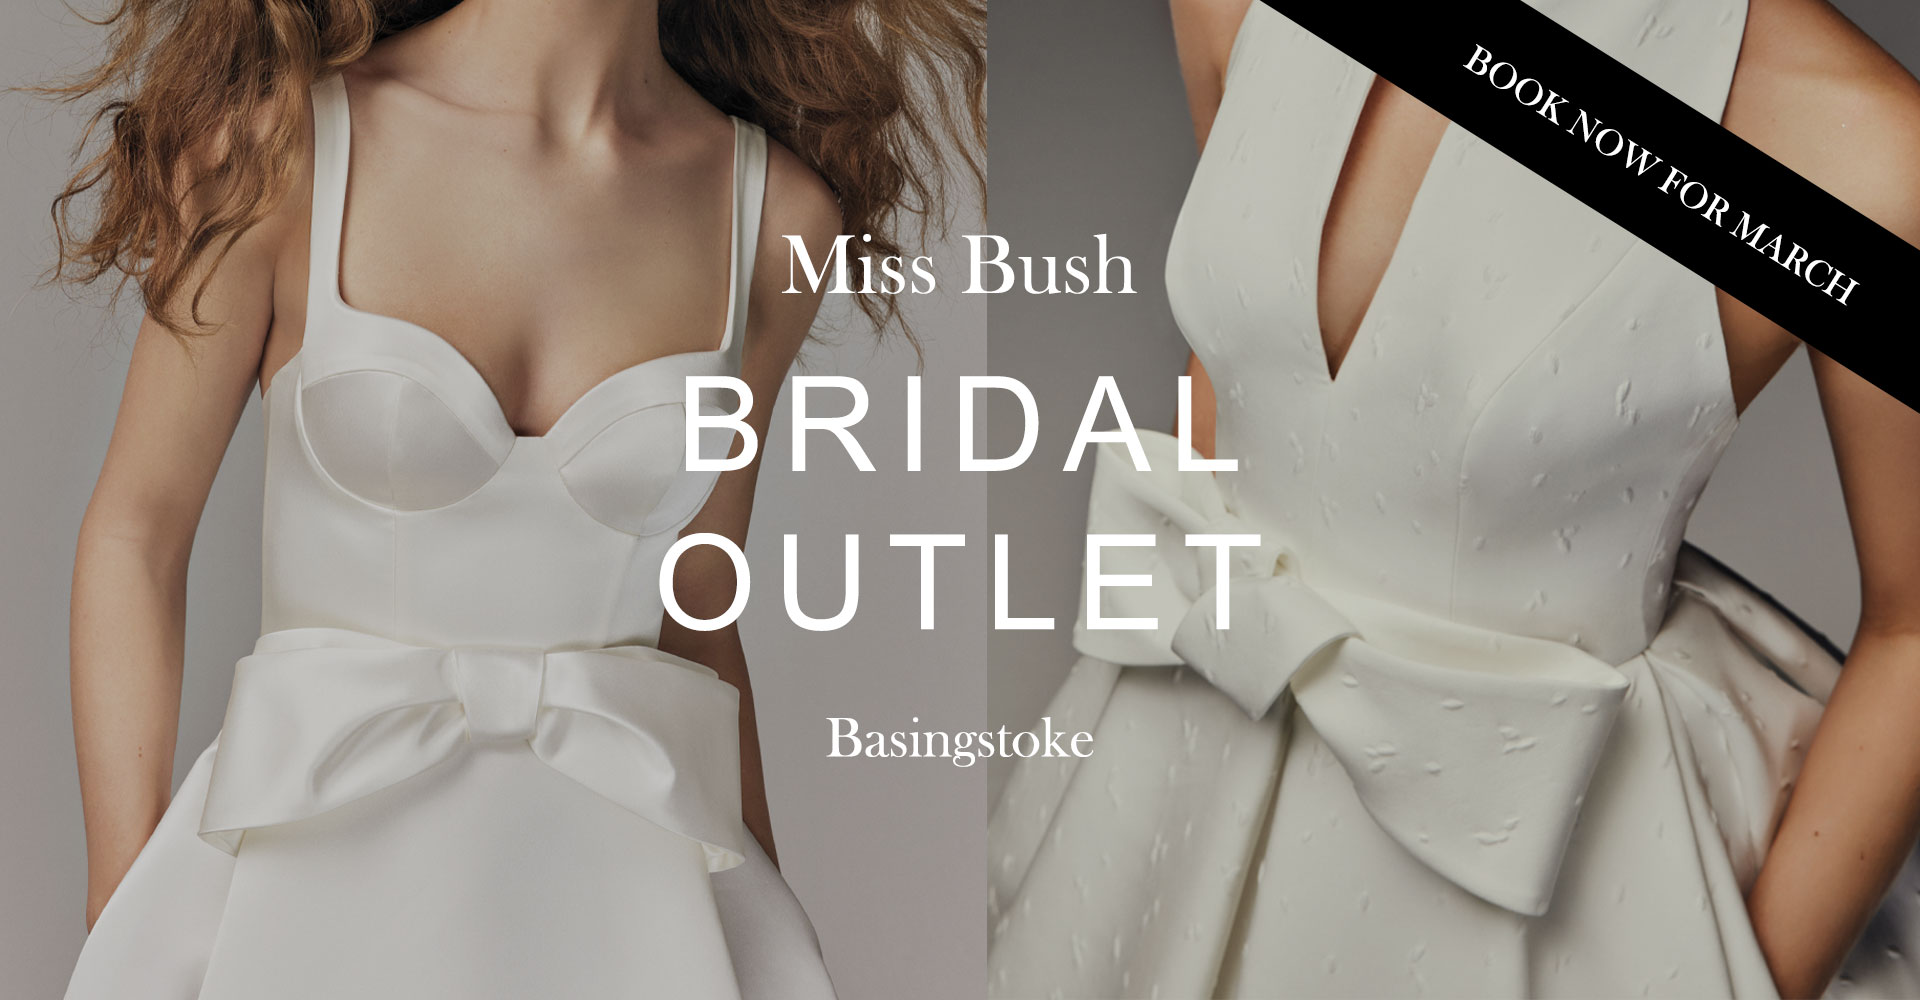 Miss Bush Bridal Outlet - Surrey, Basingstoke, Hampshire